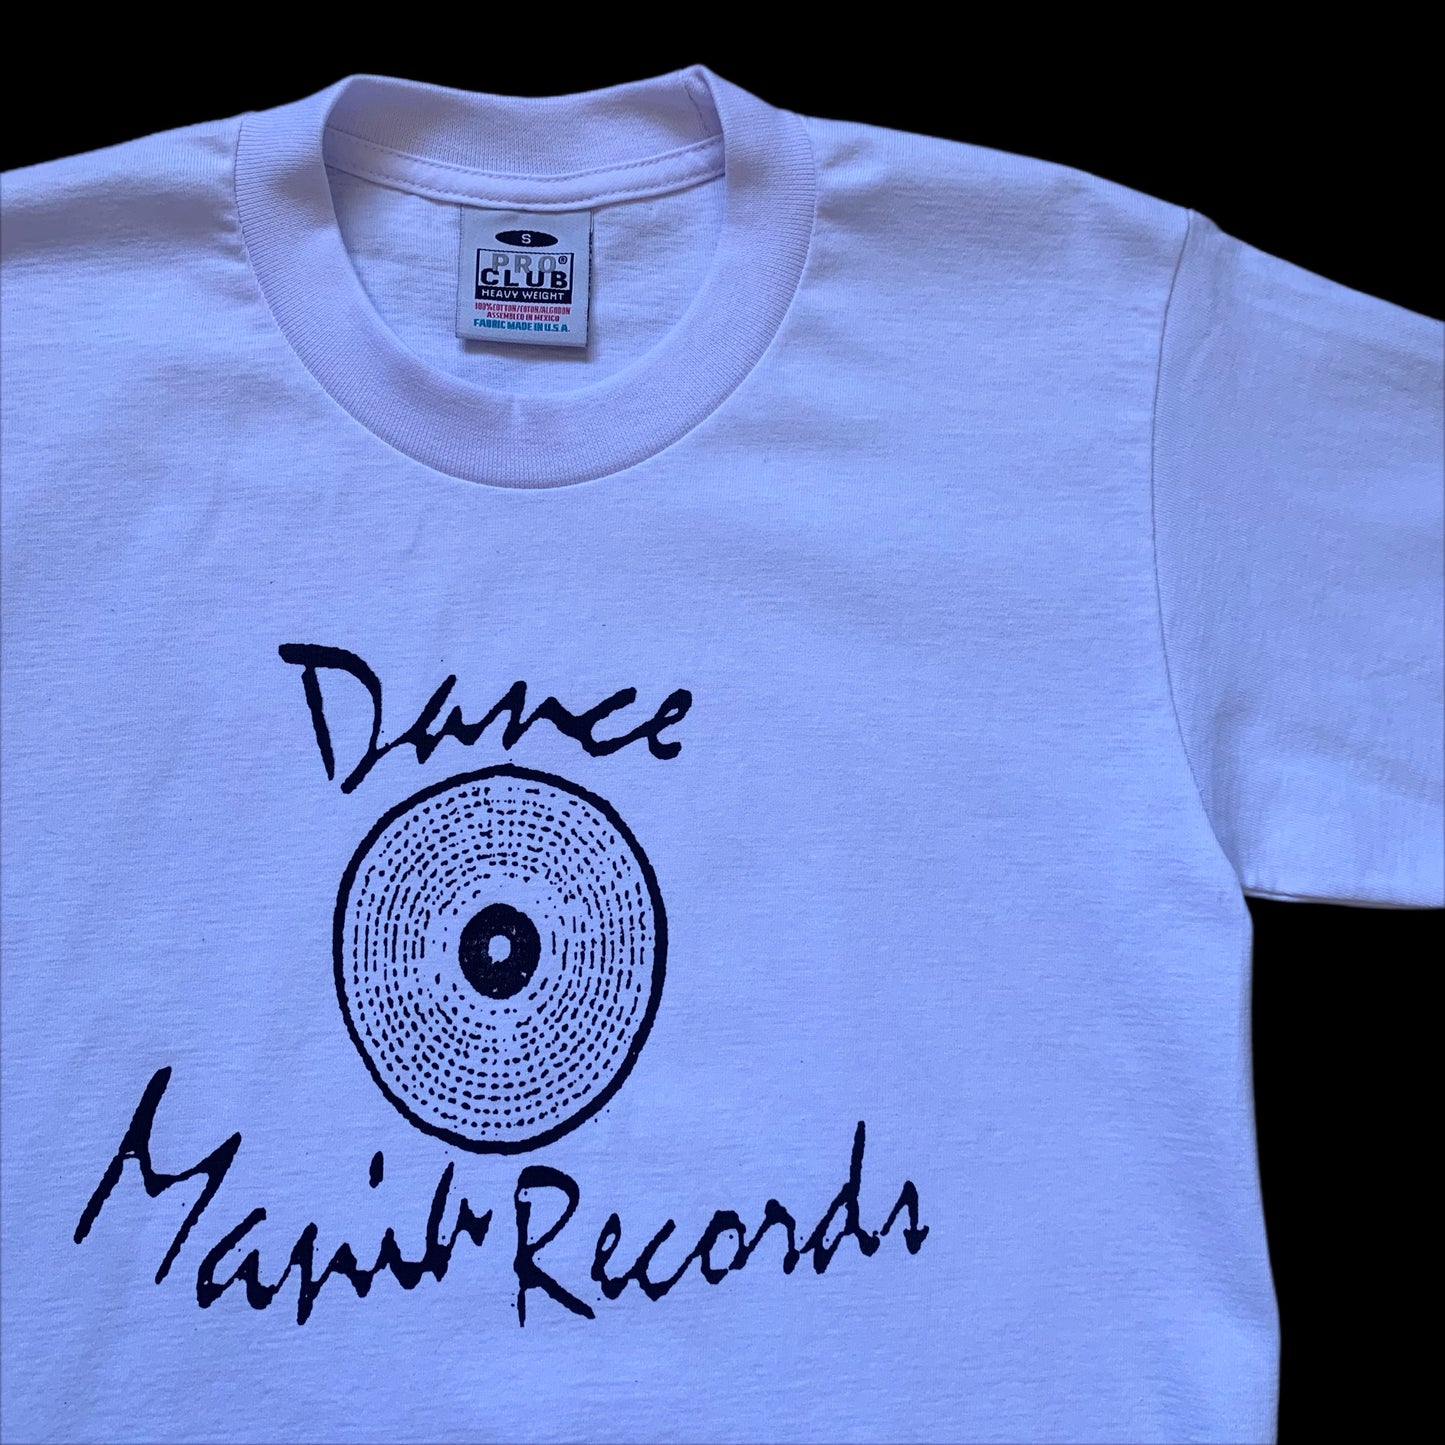 dance mania records tee